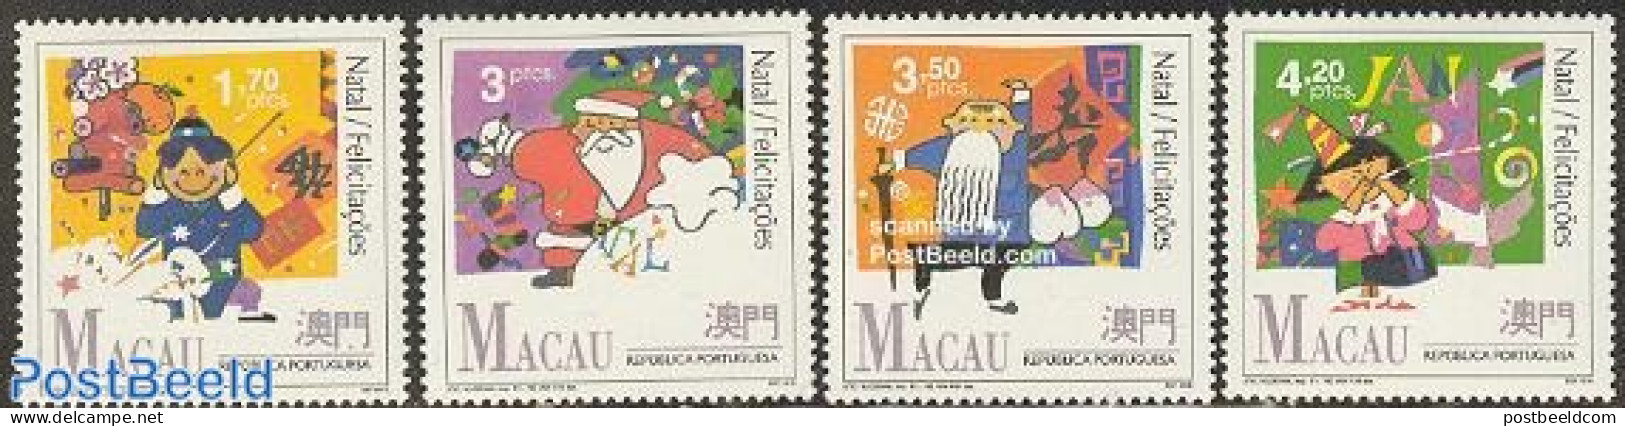 Macao 1991 Christmas 4v, Mint NH, Religion - Christmas - Neufs